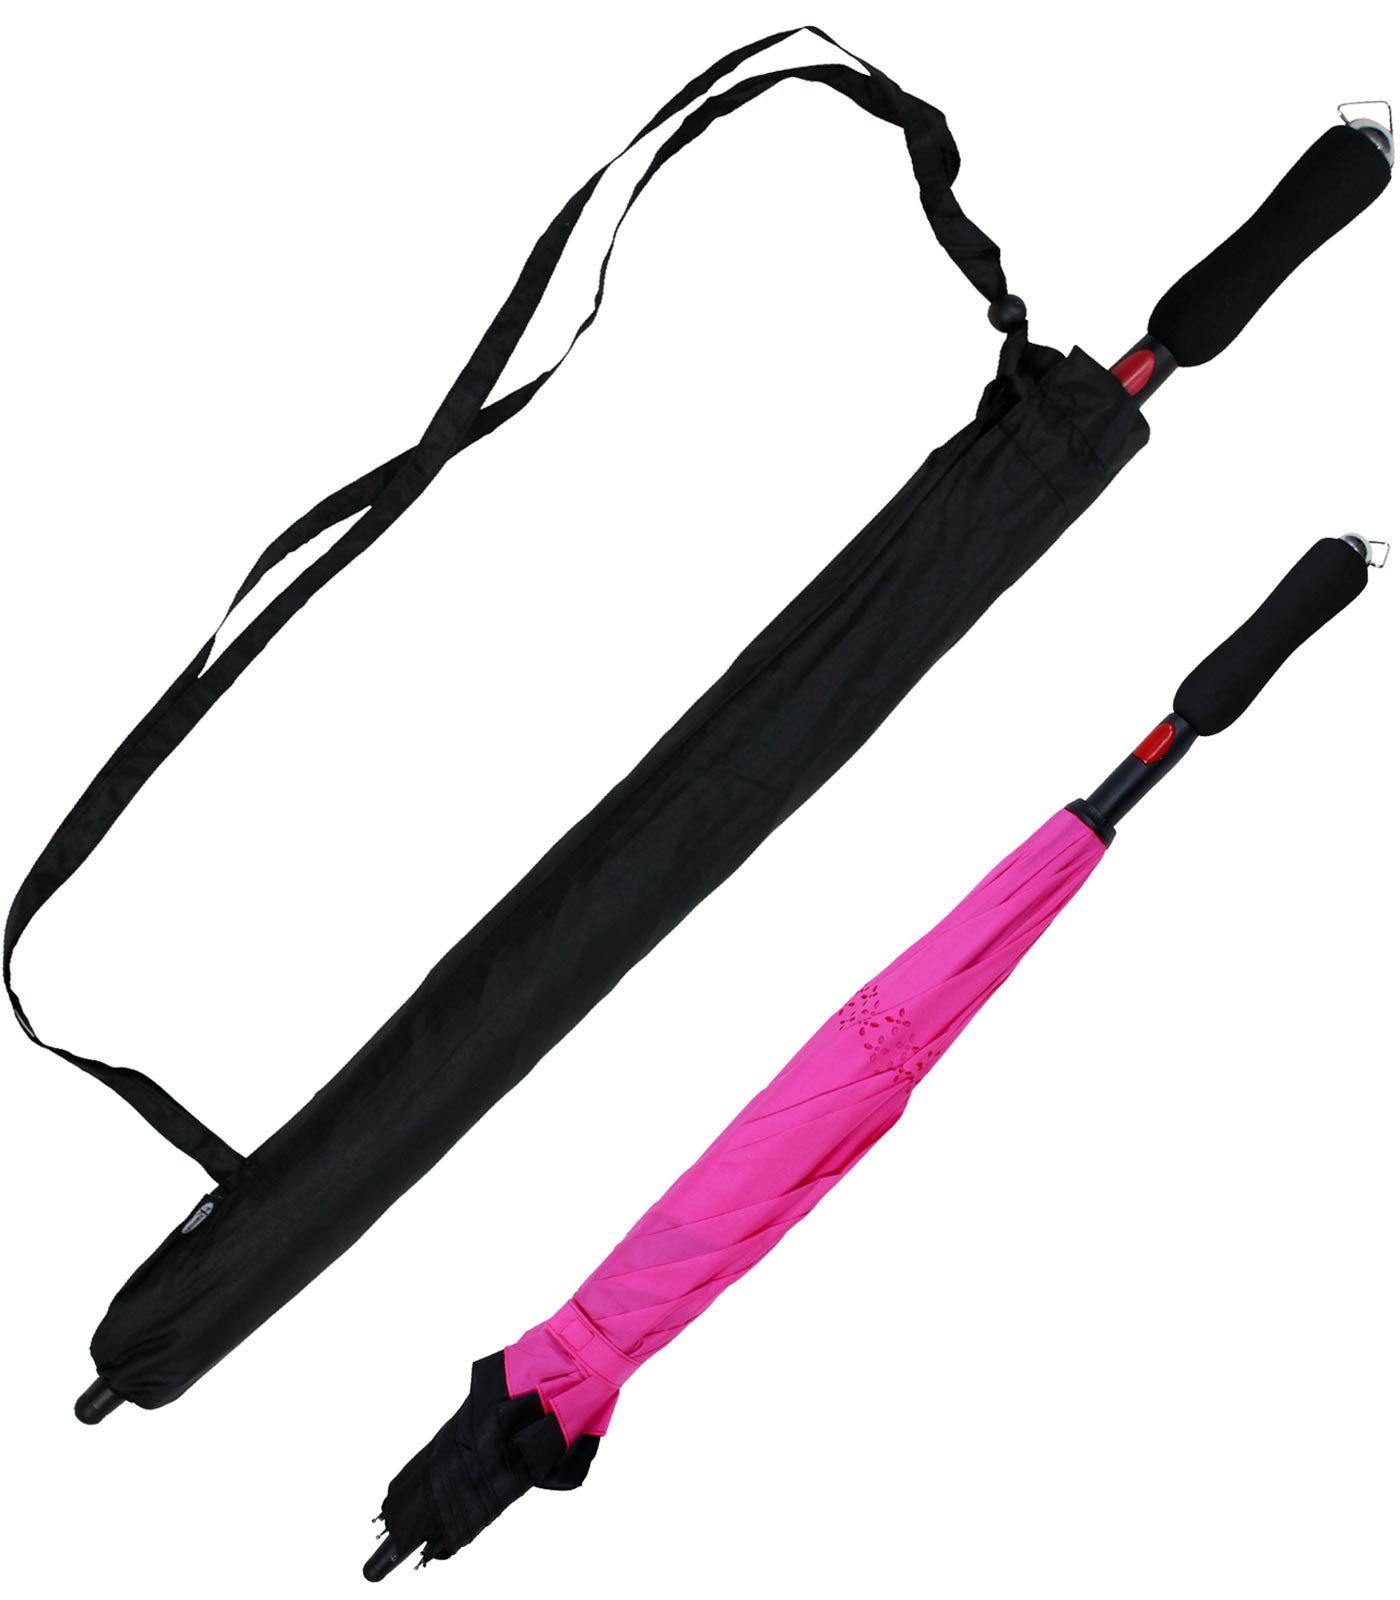 iX-brella zu schwarz-neon-pink umgedreht öffnen Langregenschirm umgedreht Automatik, Reverse-Schirm - mit